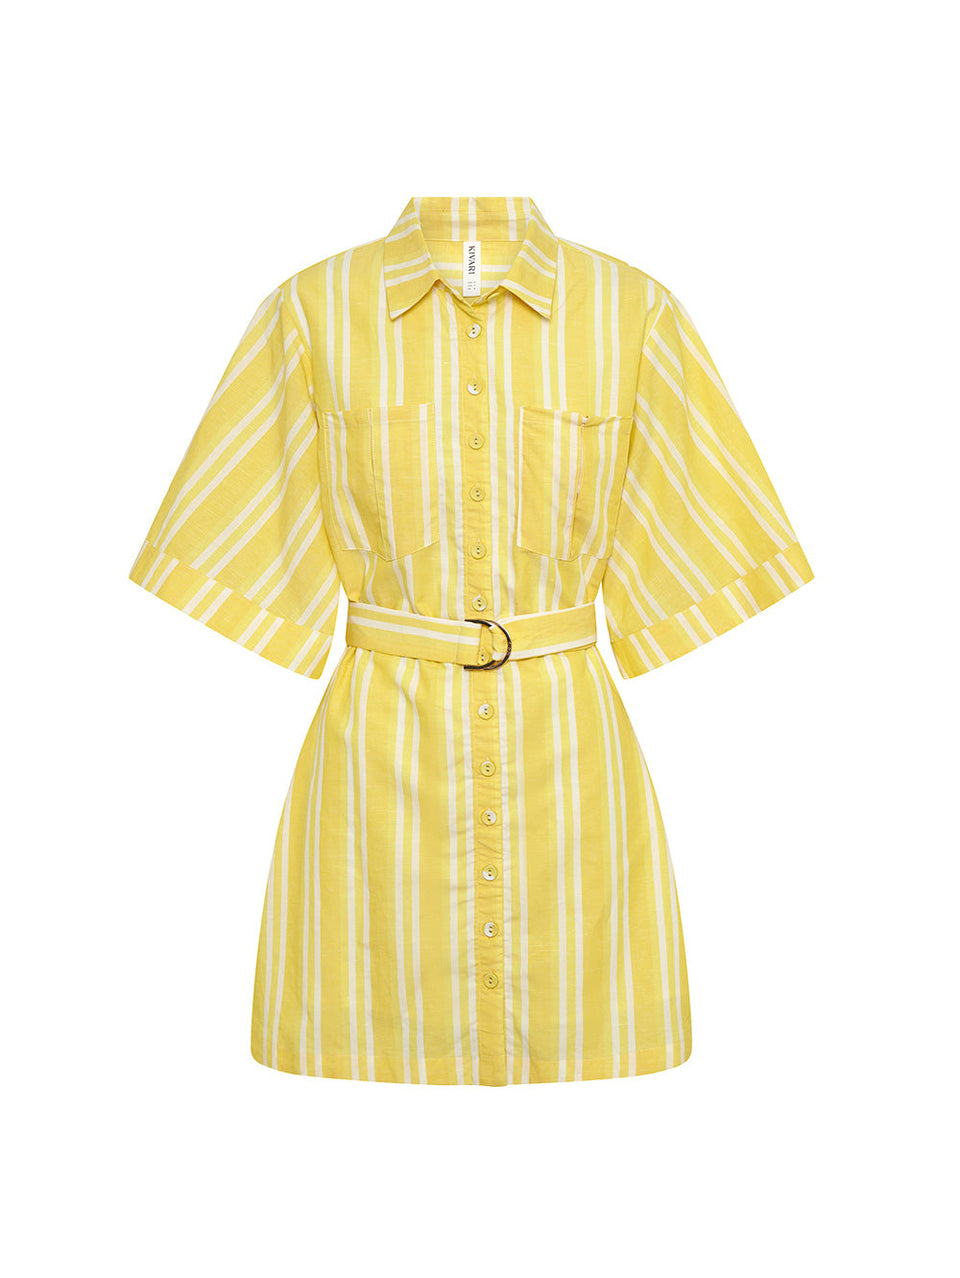 Lola Shirt Dress KIVARI | Yellow and white striped shirt dress